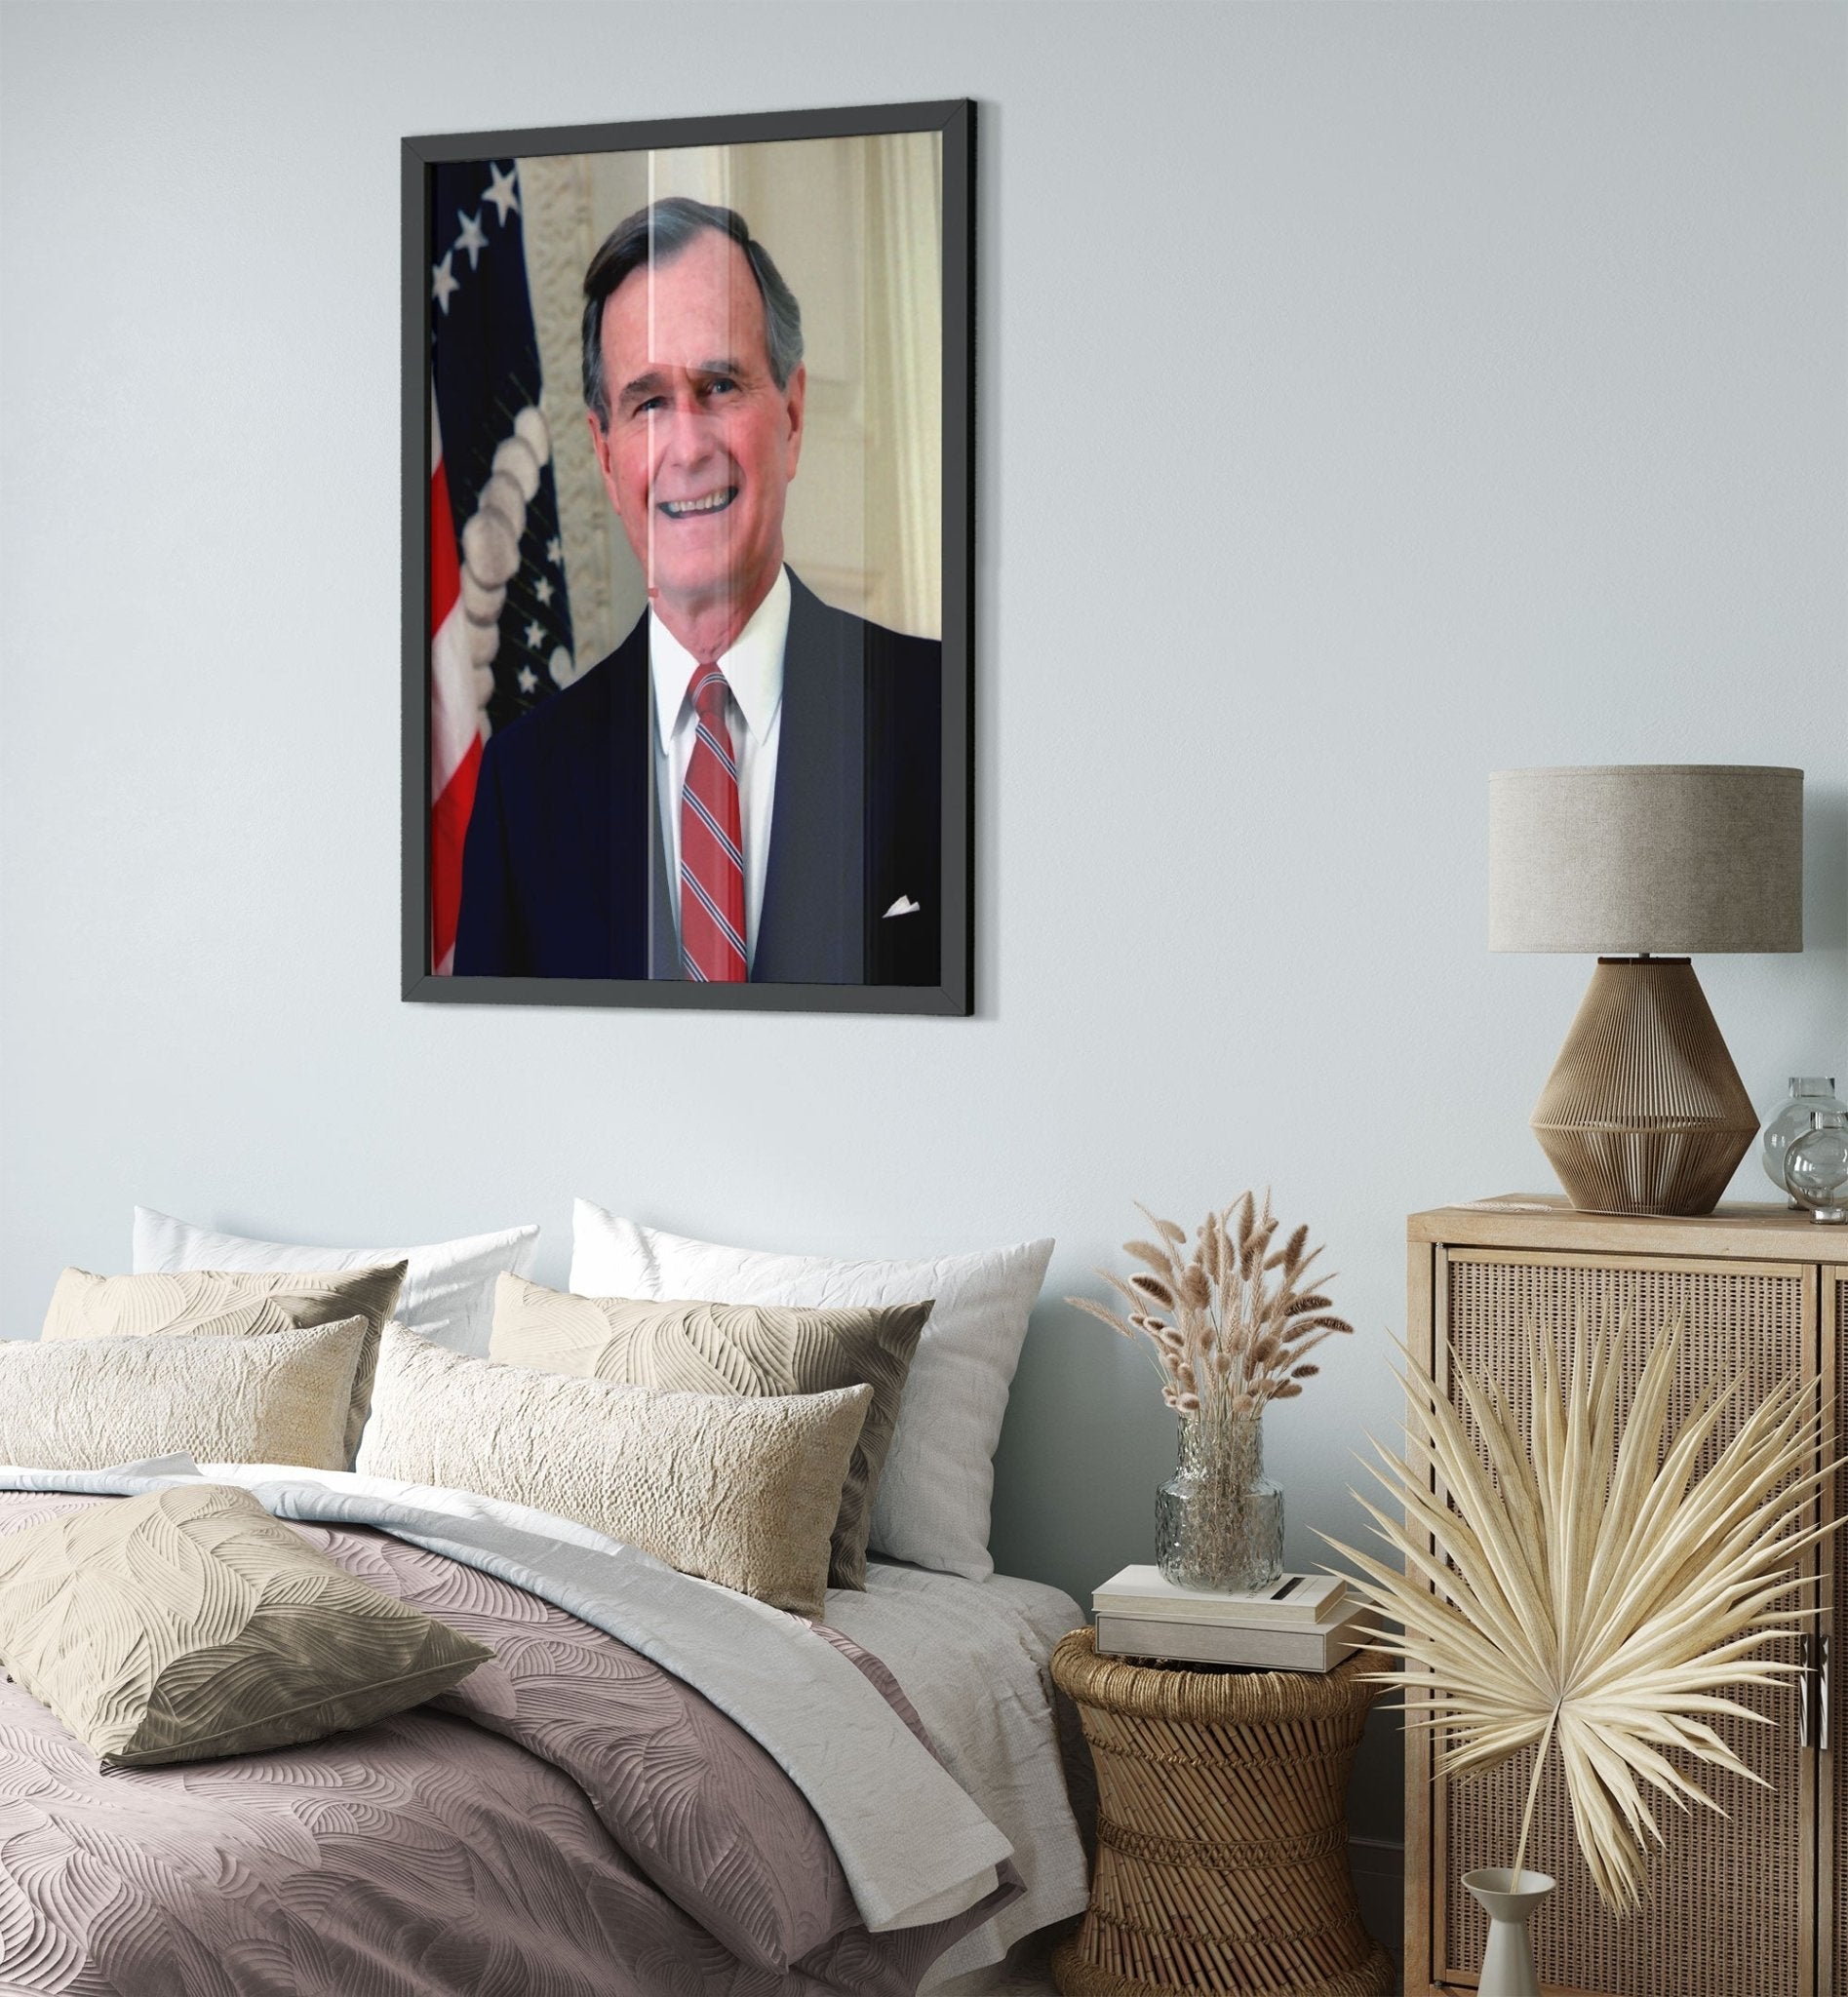 George H Bush Framed, 41st President Of These United States, Vintage Photo Portrait - George H Bush Framed Print UK, EU USA Domestic Shipping - WallArtPrints4U